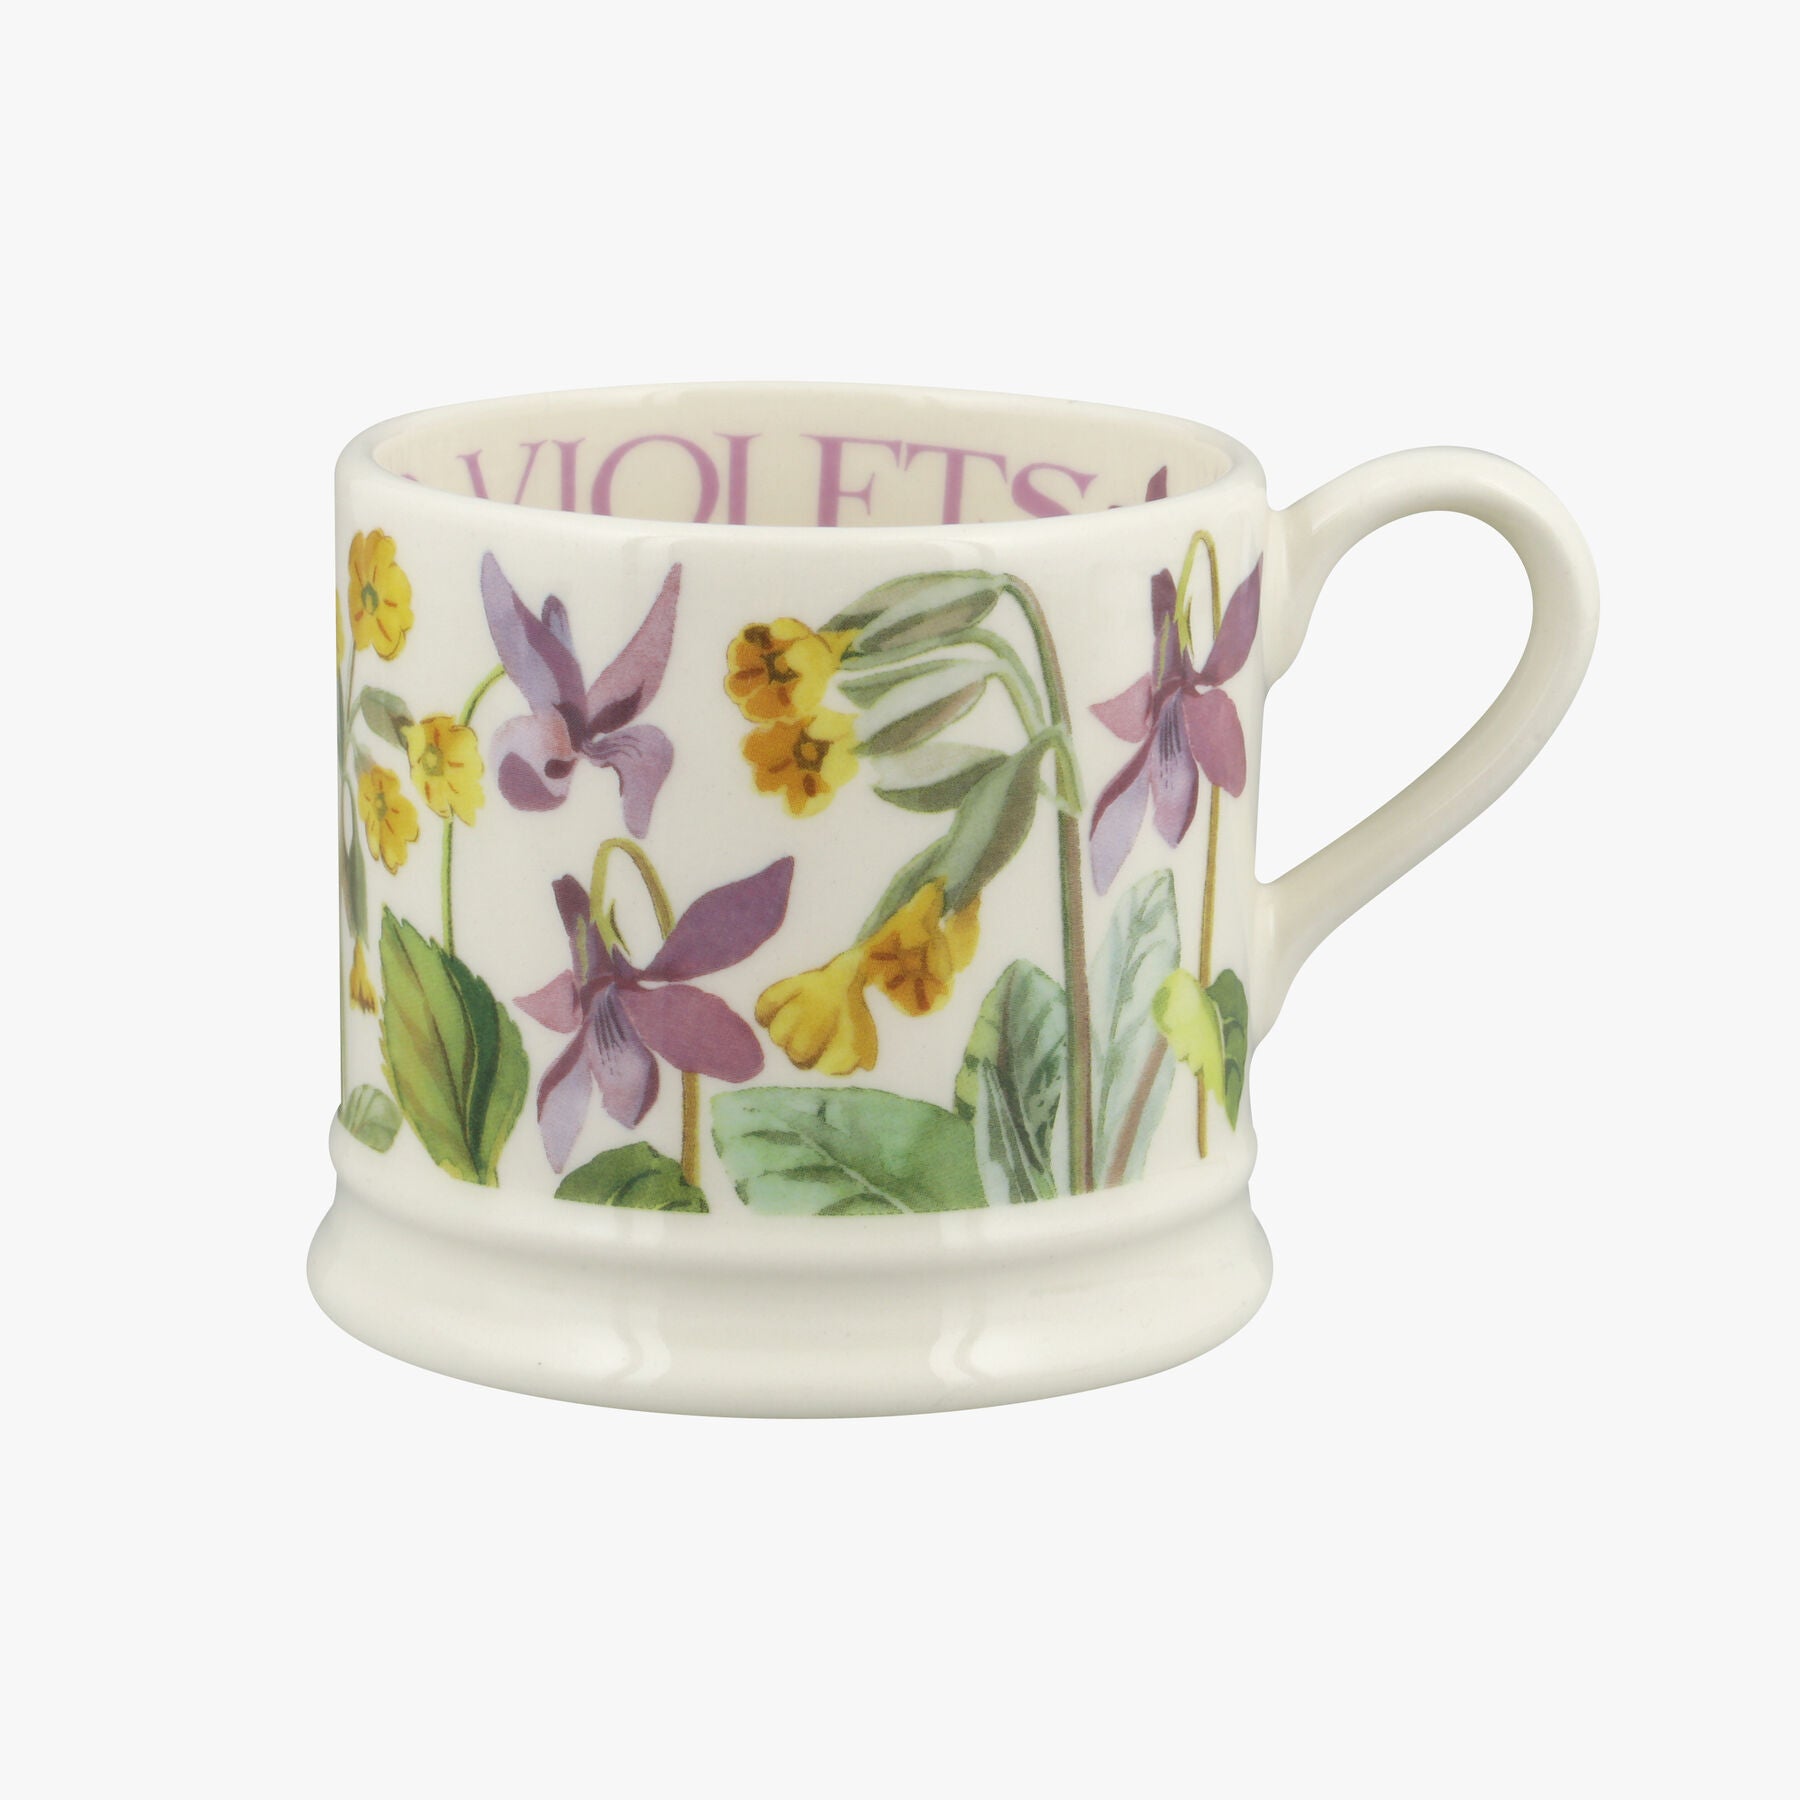 Cowslips & Wild Violets Small Mug - Unique Handmade & Handpainted English Earthenware Tea/Coffee Mug